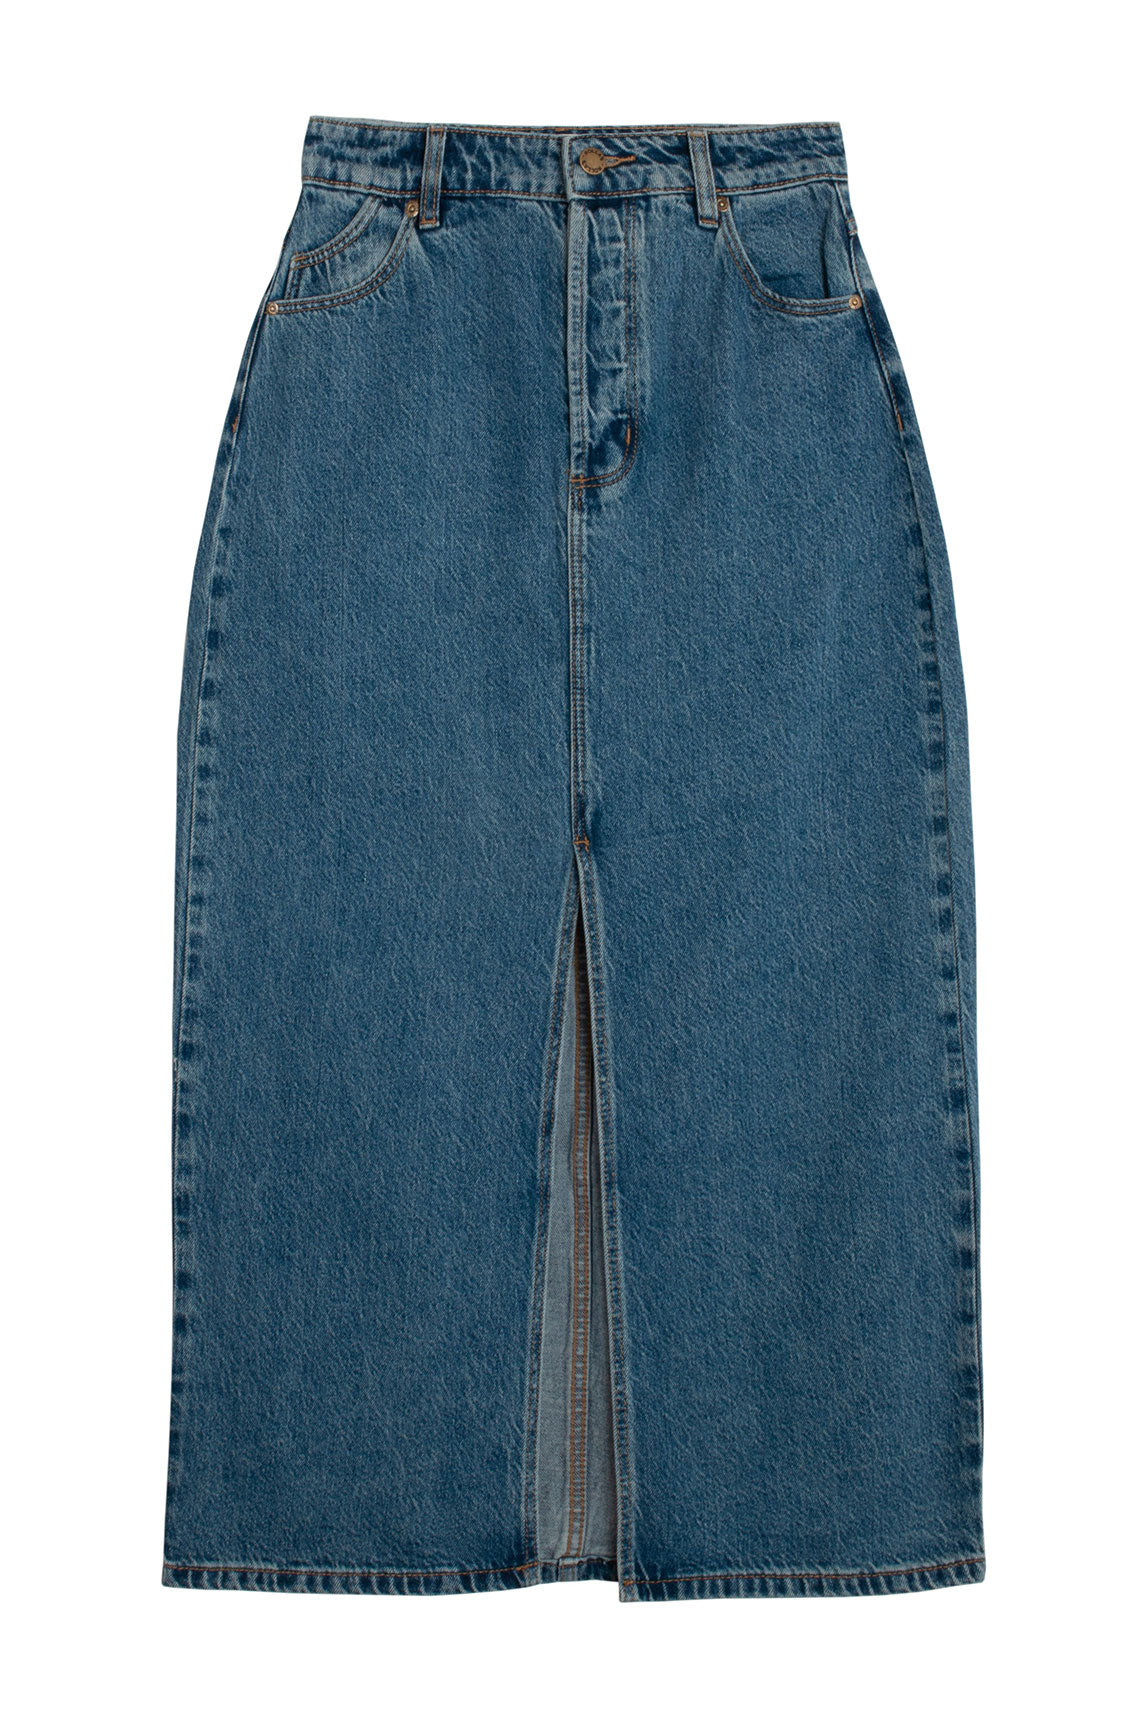 Vintage Blue Chicago Skirt